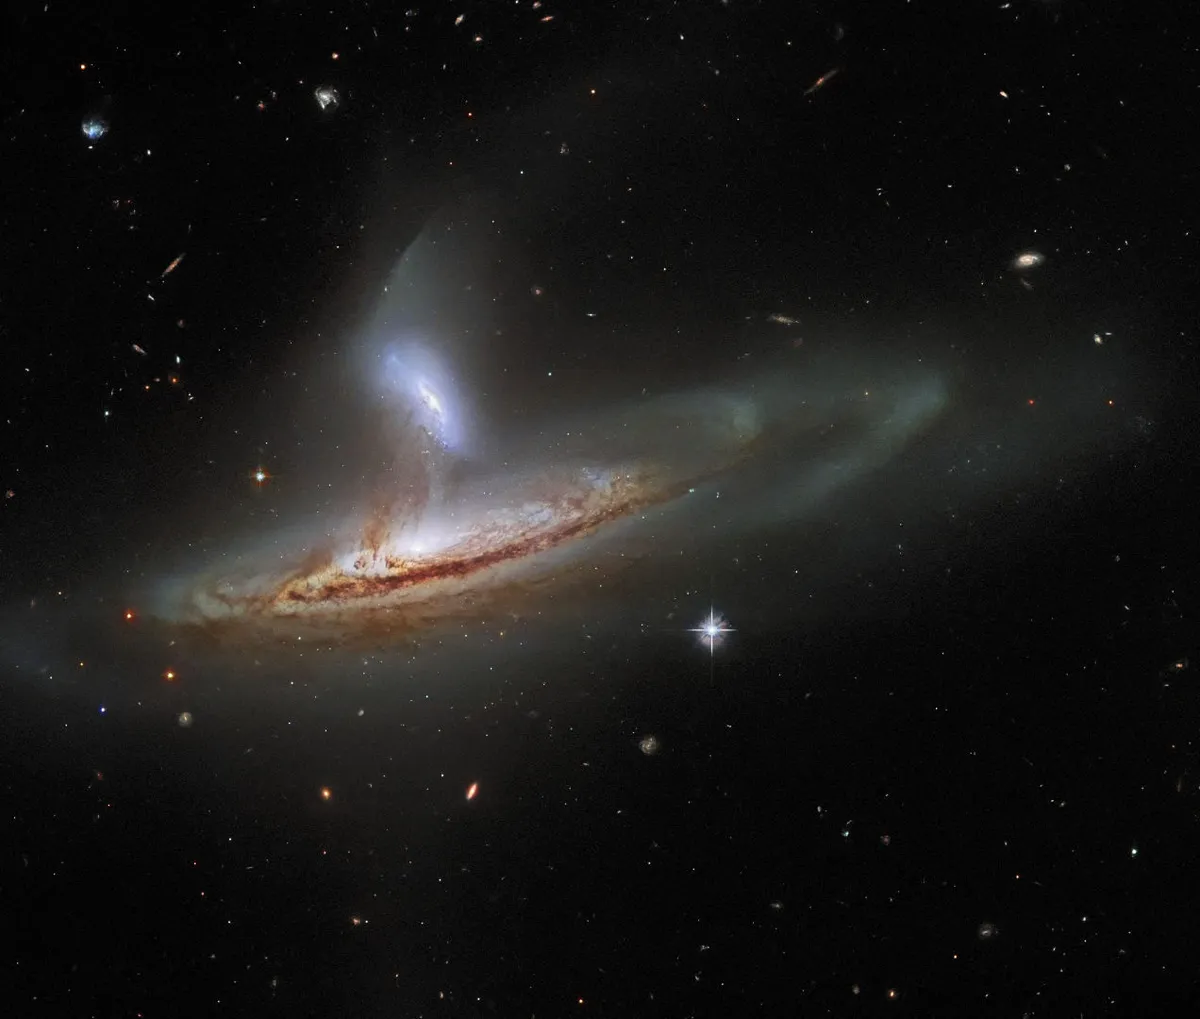 Arp 282: Seyfert galaxy NGC 169 (bottom) interacting with galaxy IC 1559 (top) HUBBLE SPACE TELESCOPE, 7 FEBRUARY 2022 IMAGE CREDIT: ESA/Hubble & NASA, J. Dalcanton, Dark Energy Survey, DOE, FNAL/DECam, CTIO/NOIRLab/NSF/AURA, SDSS Acknowledgement: J. Schmidt